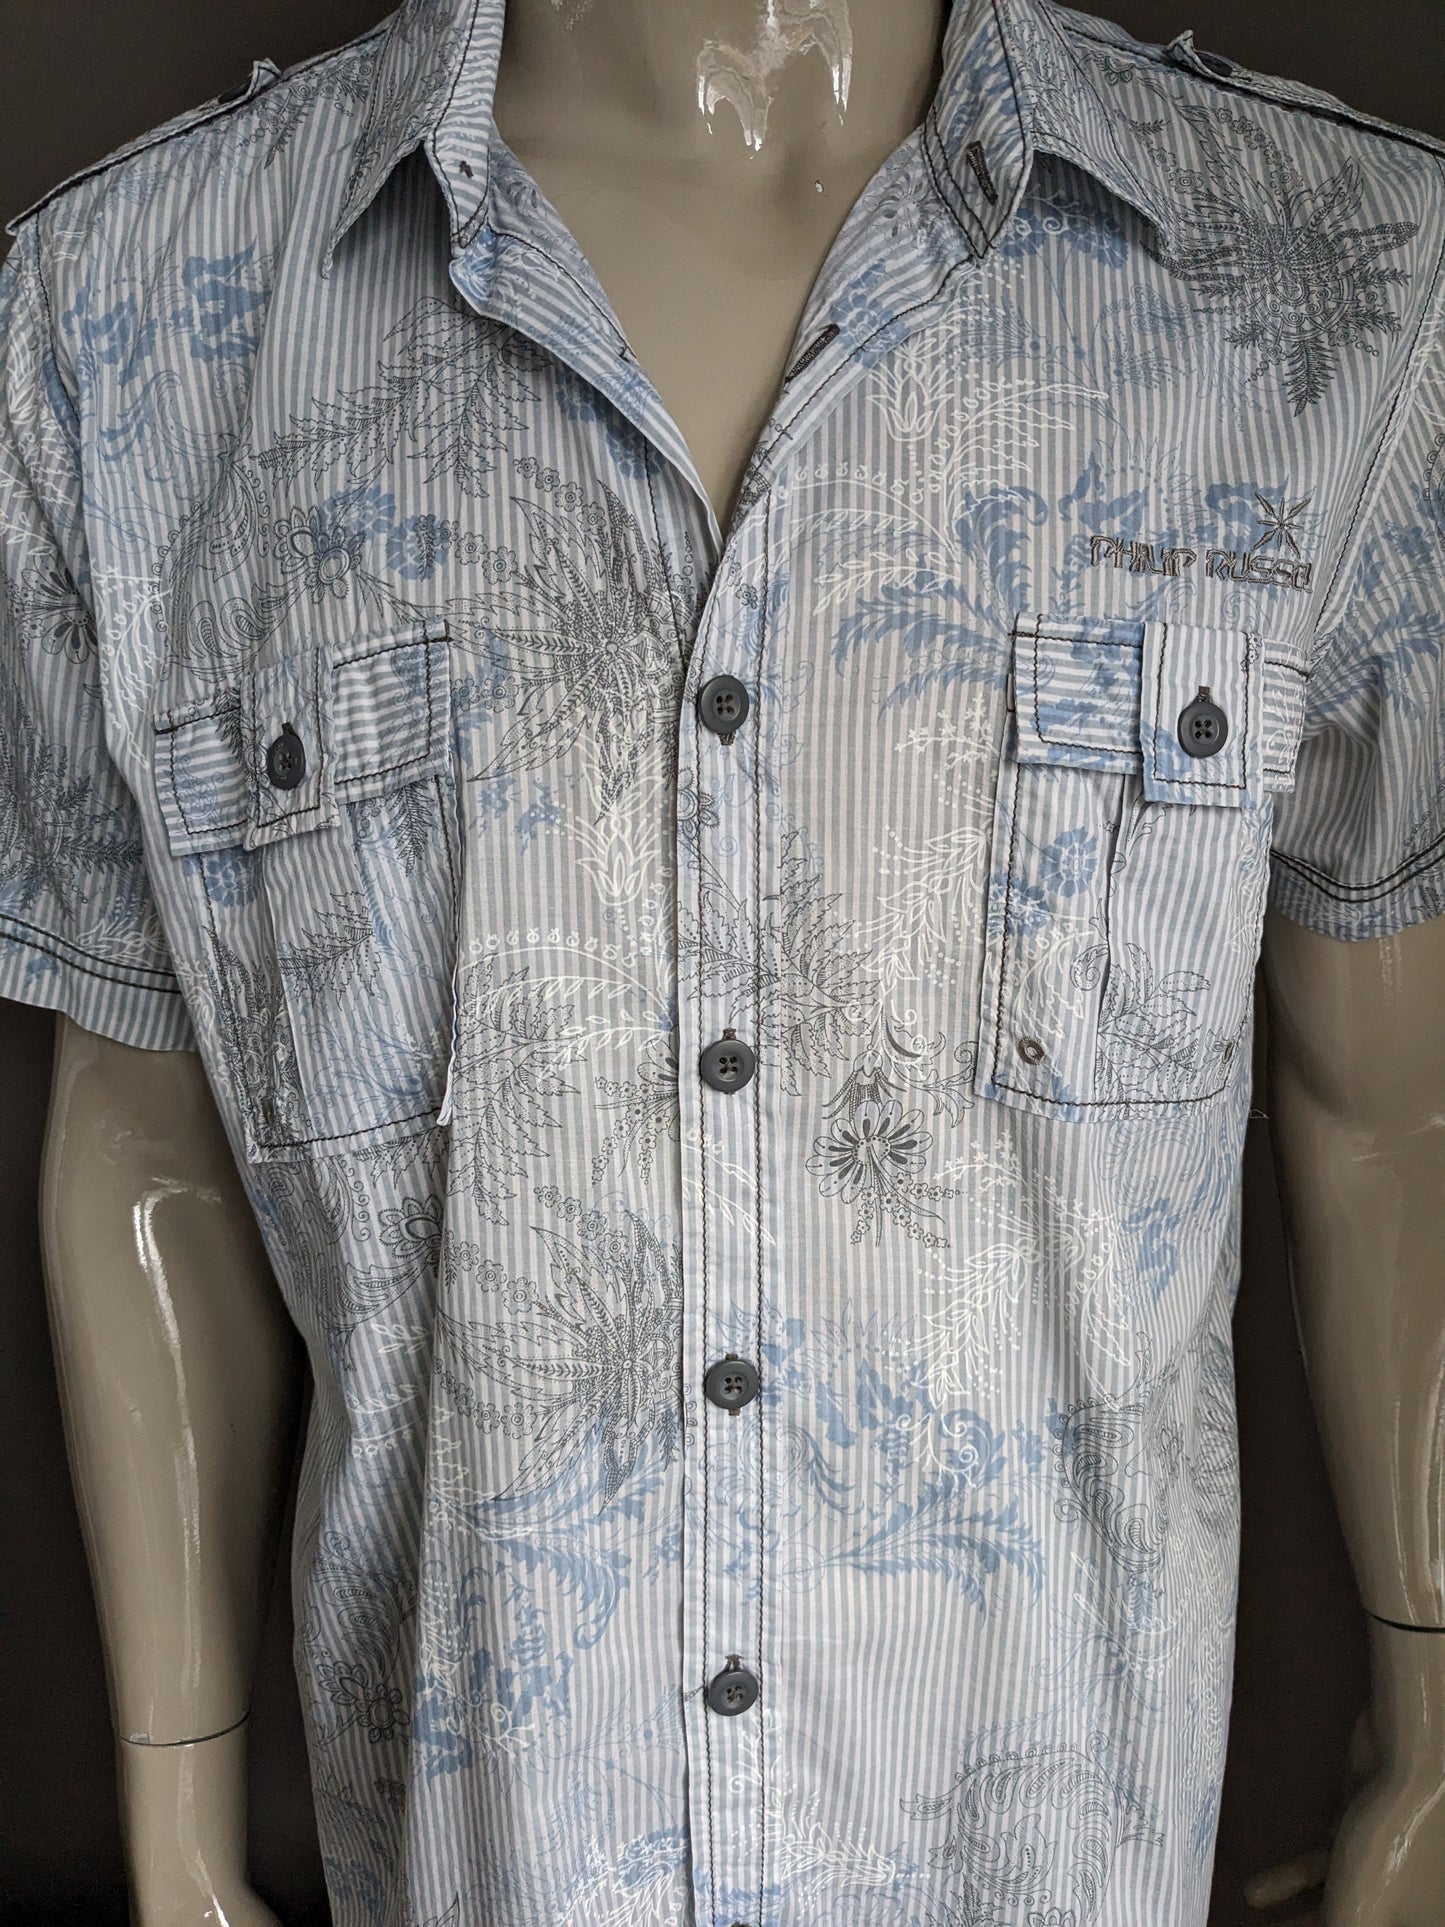 Philip Russel camisa manga corta. Impresión gris azul. Tamaño xl.